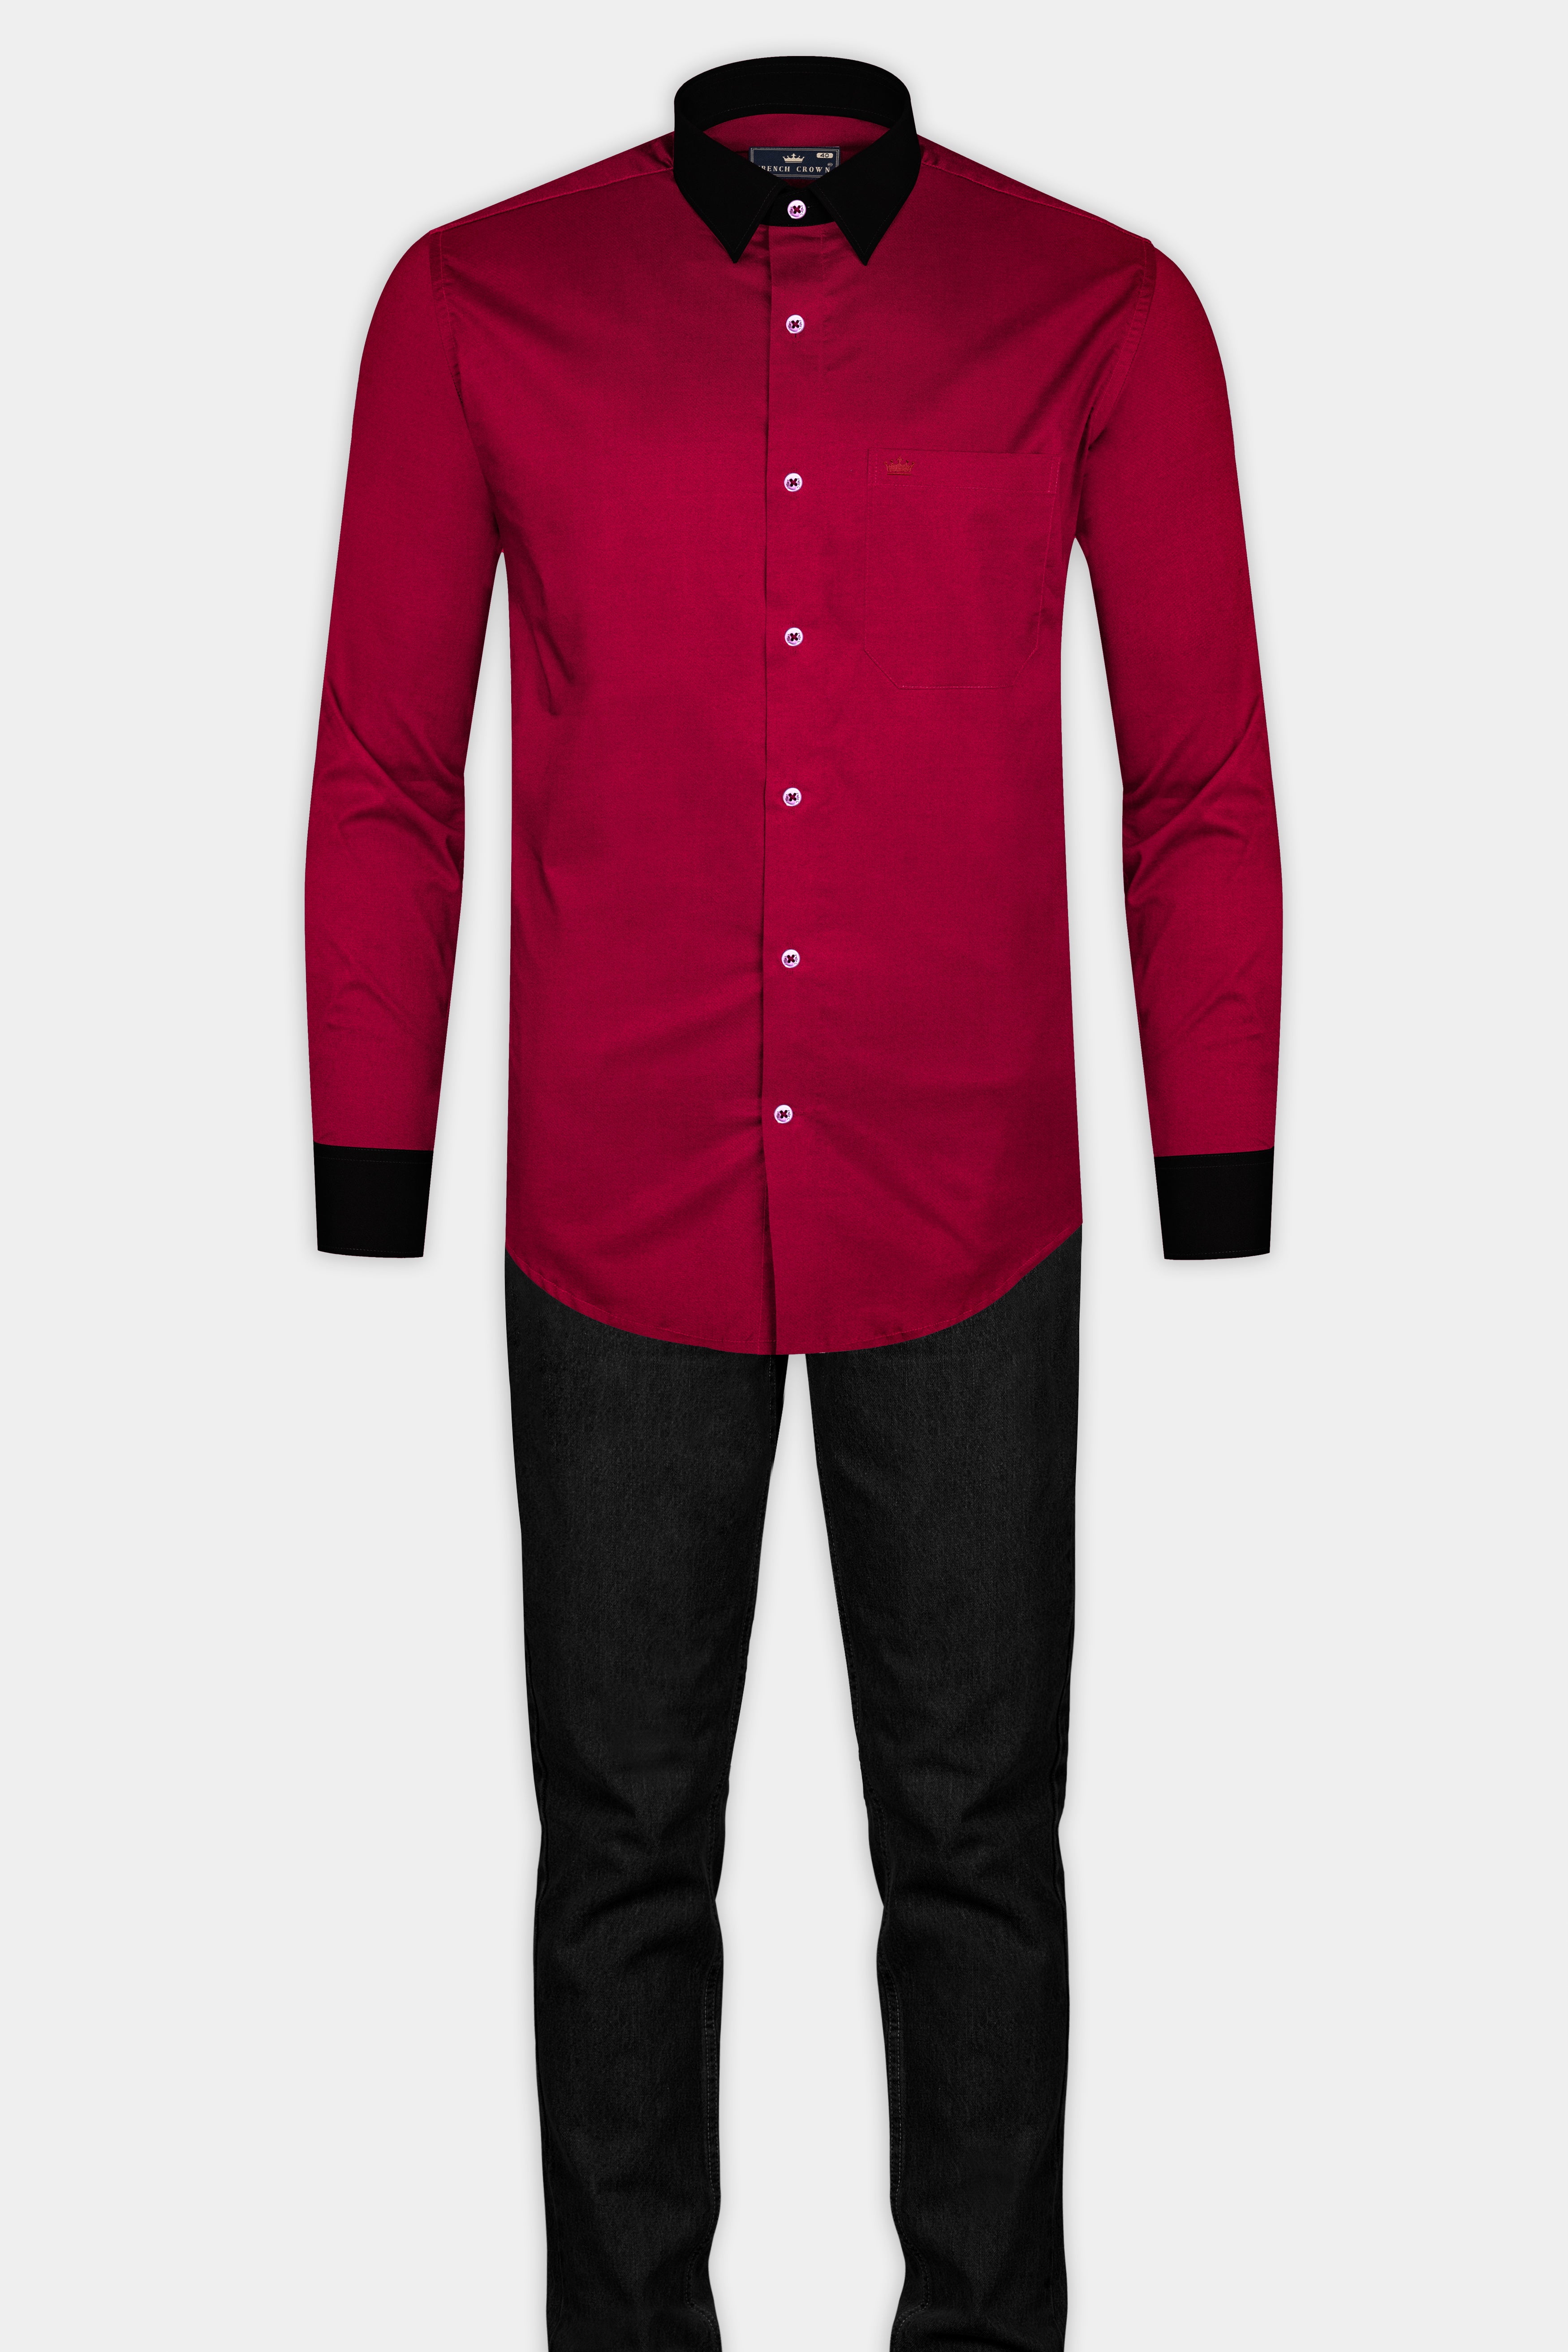 Paprika Red Super Soft Premium Cotton Shirt